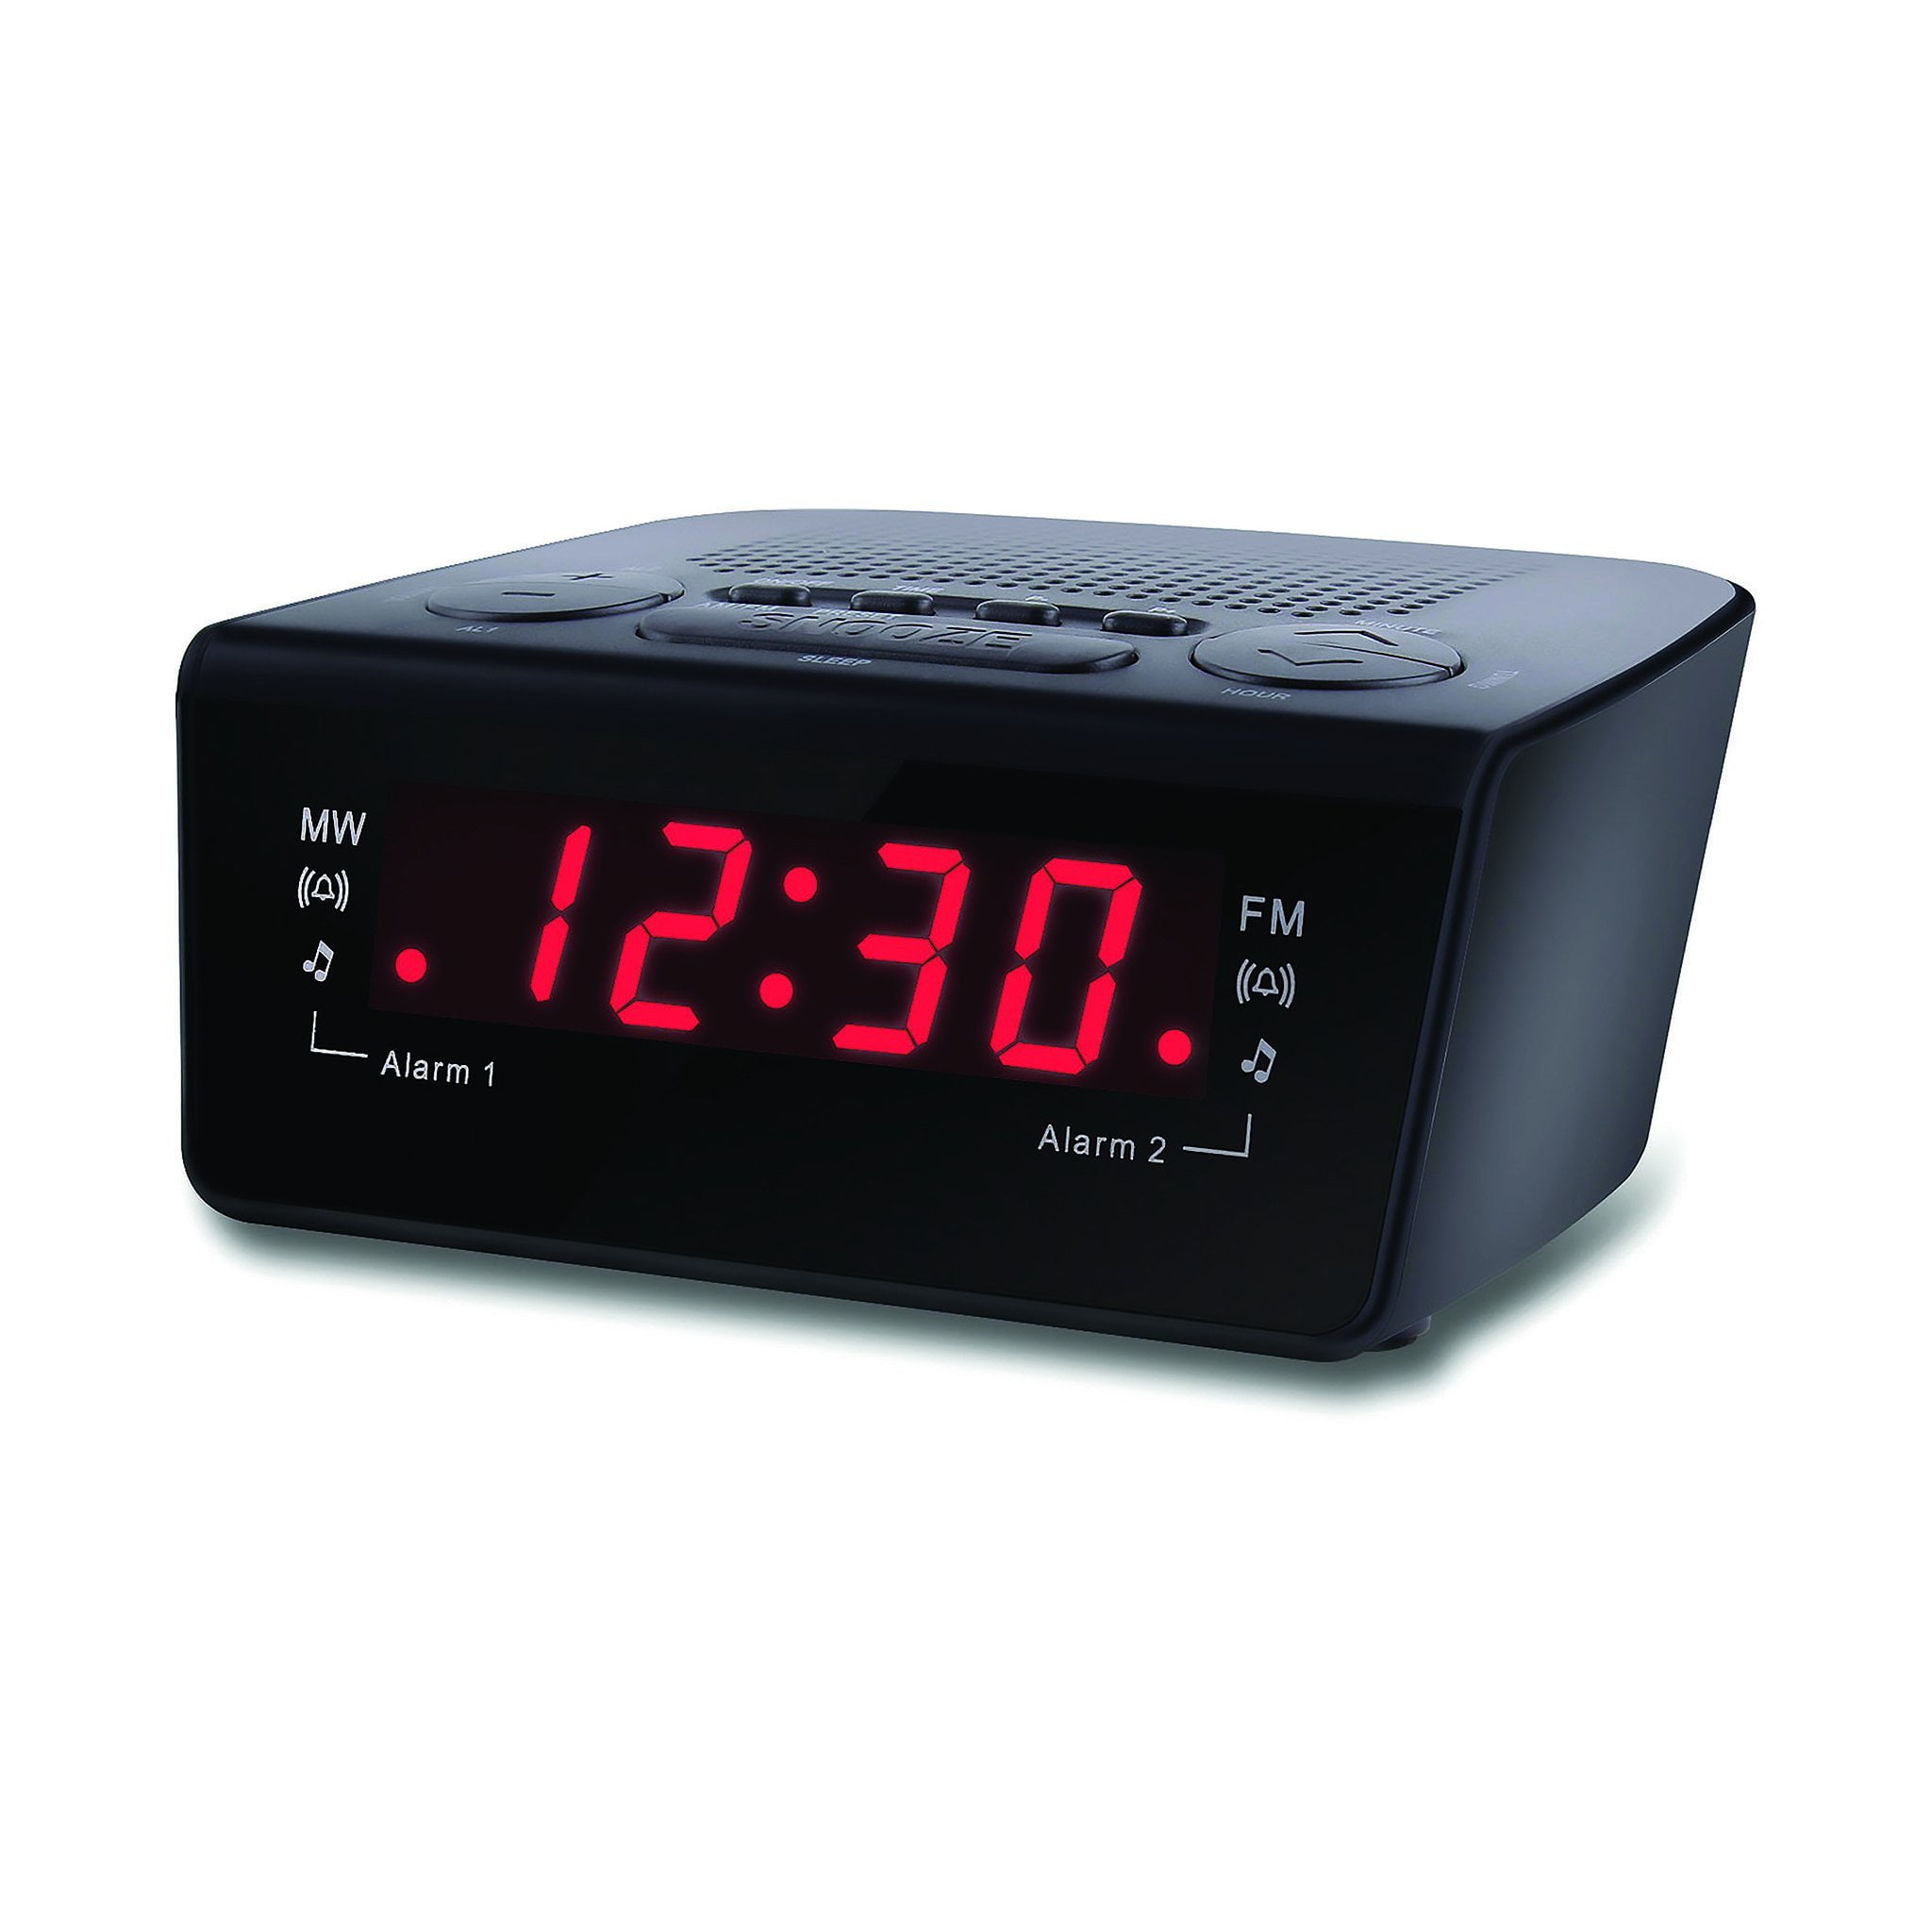 coby-digital-alarm-clock-with-am-fm-radio-and-dual-alarm-walmart